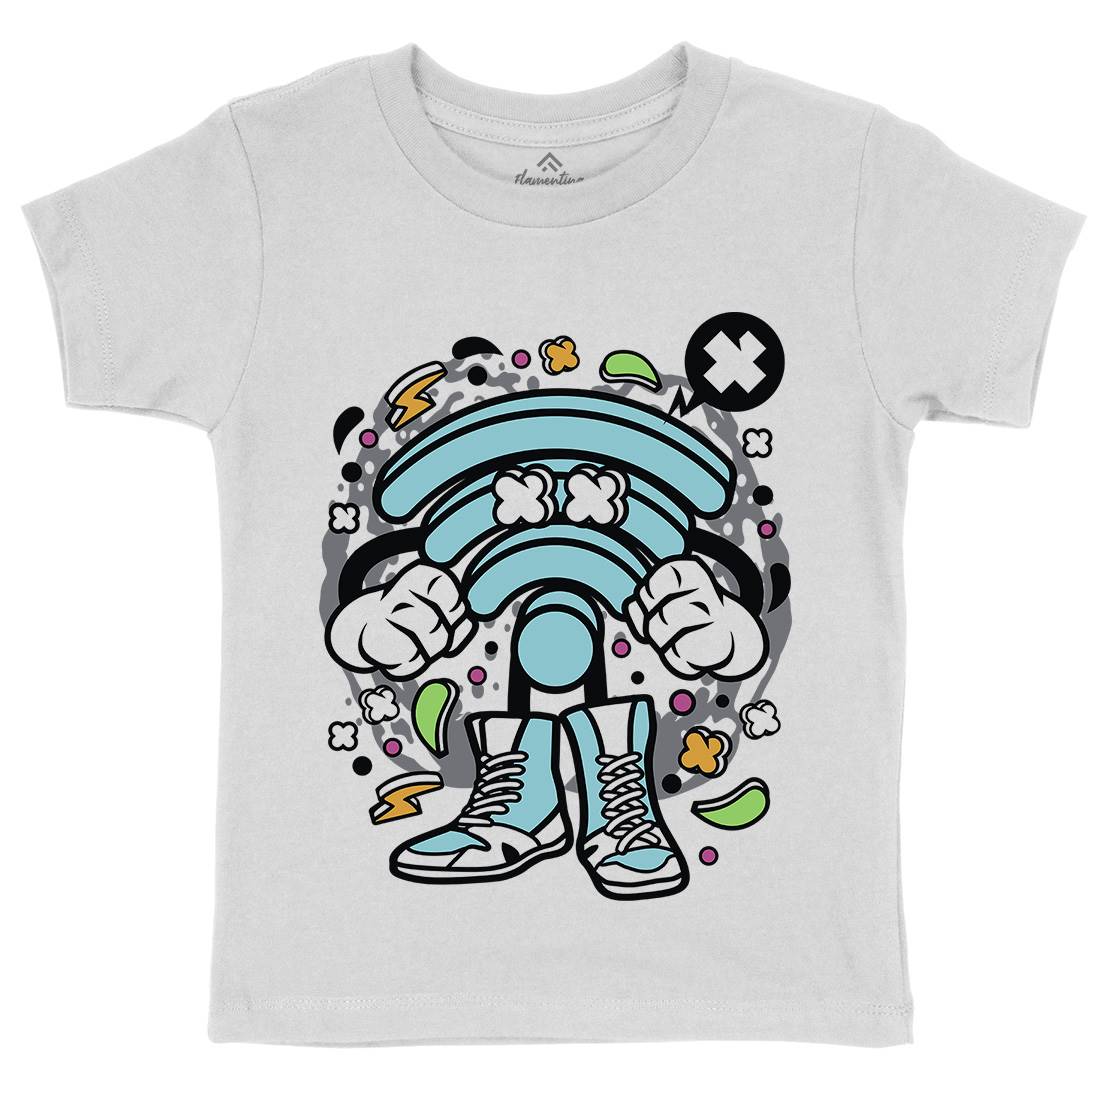 Wi-Fi Kids Crew Neck T-Shirt Geek C690